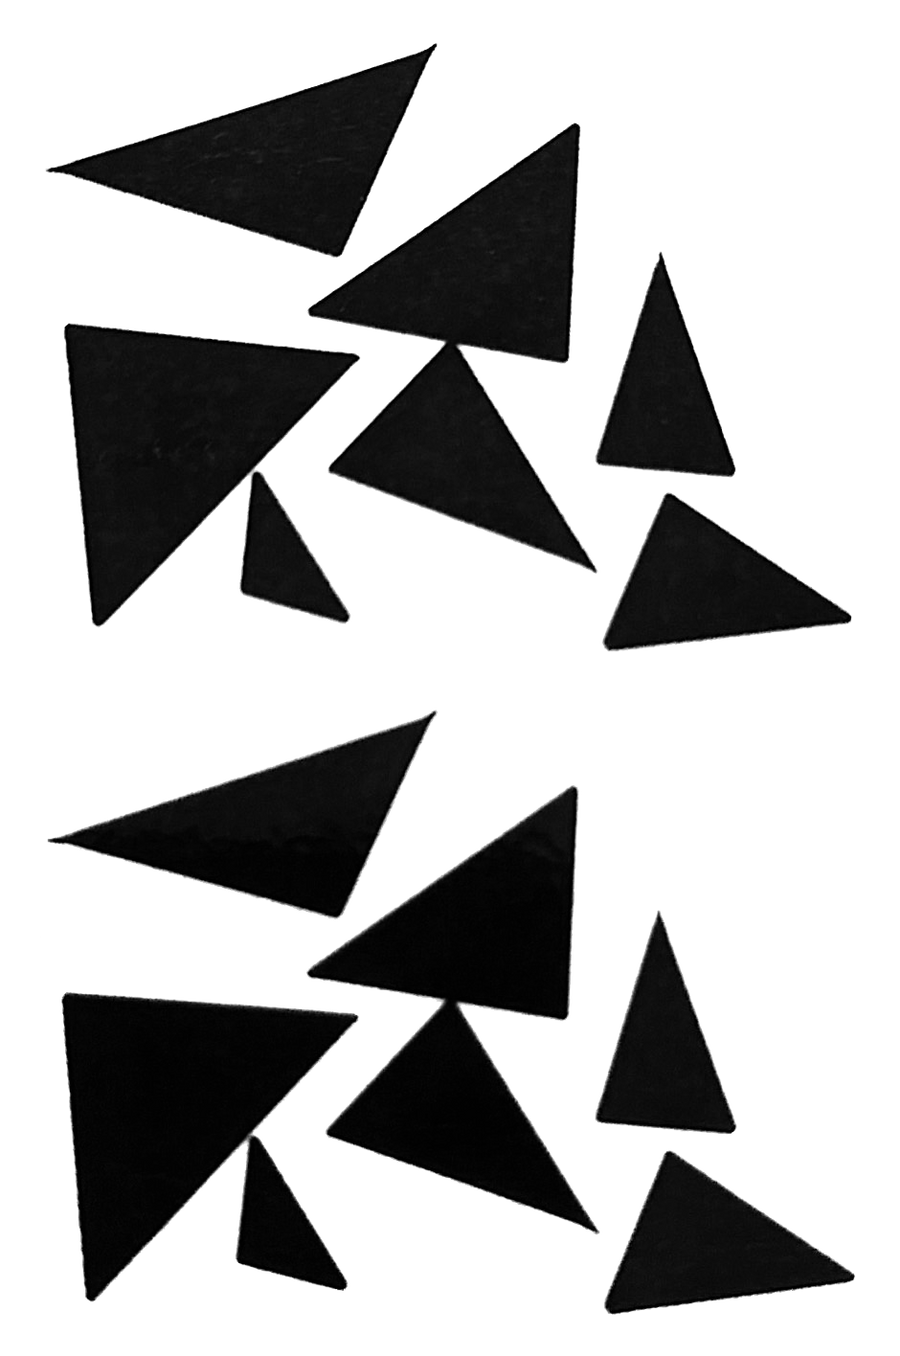 Rain of Black Triangles